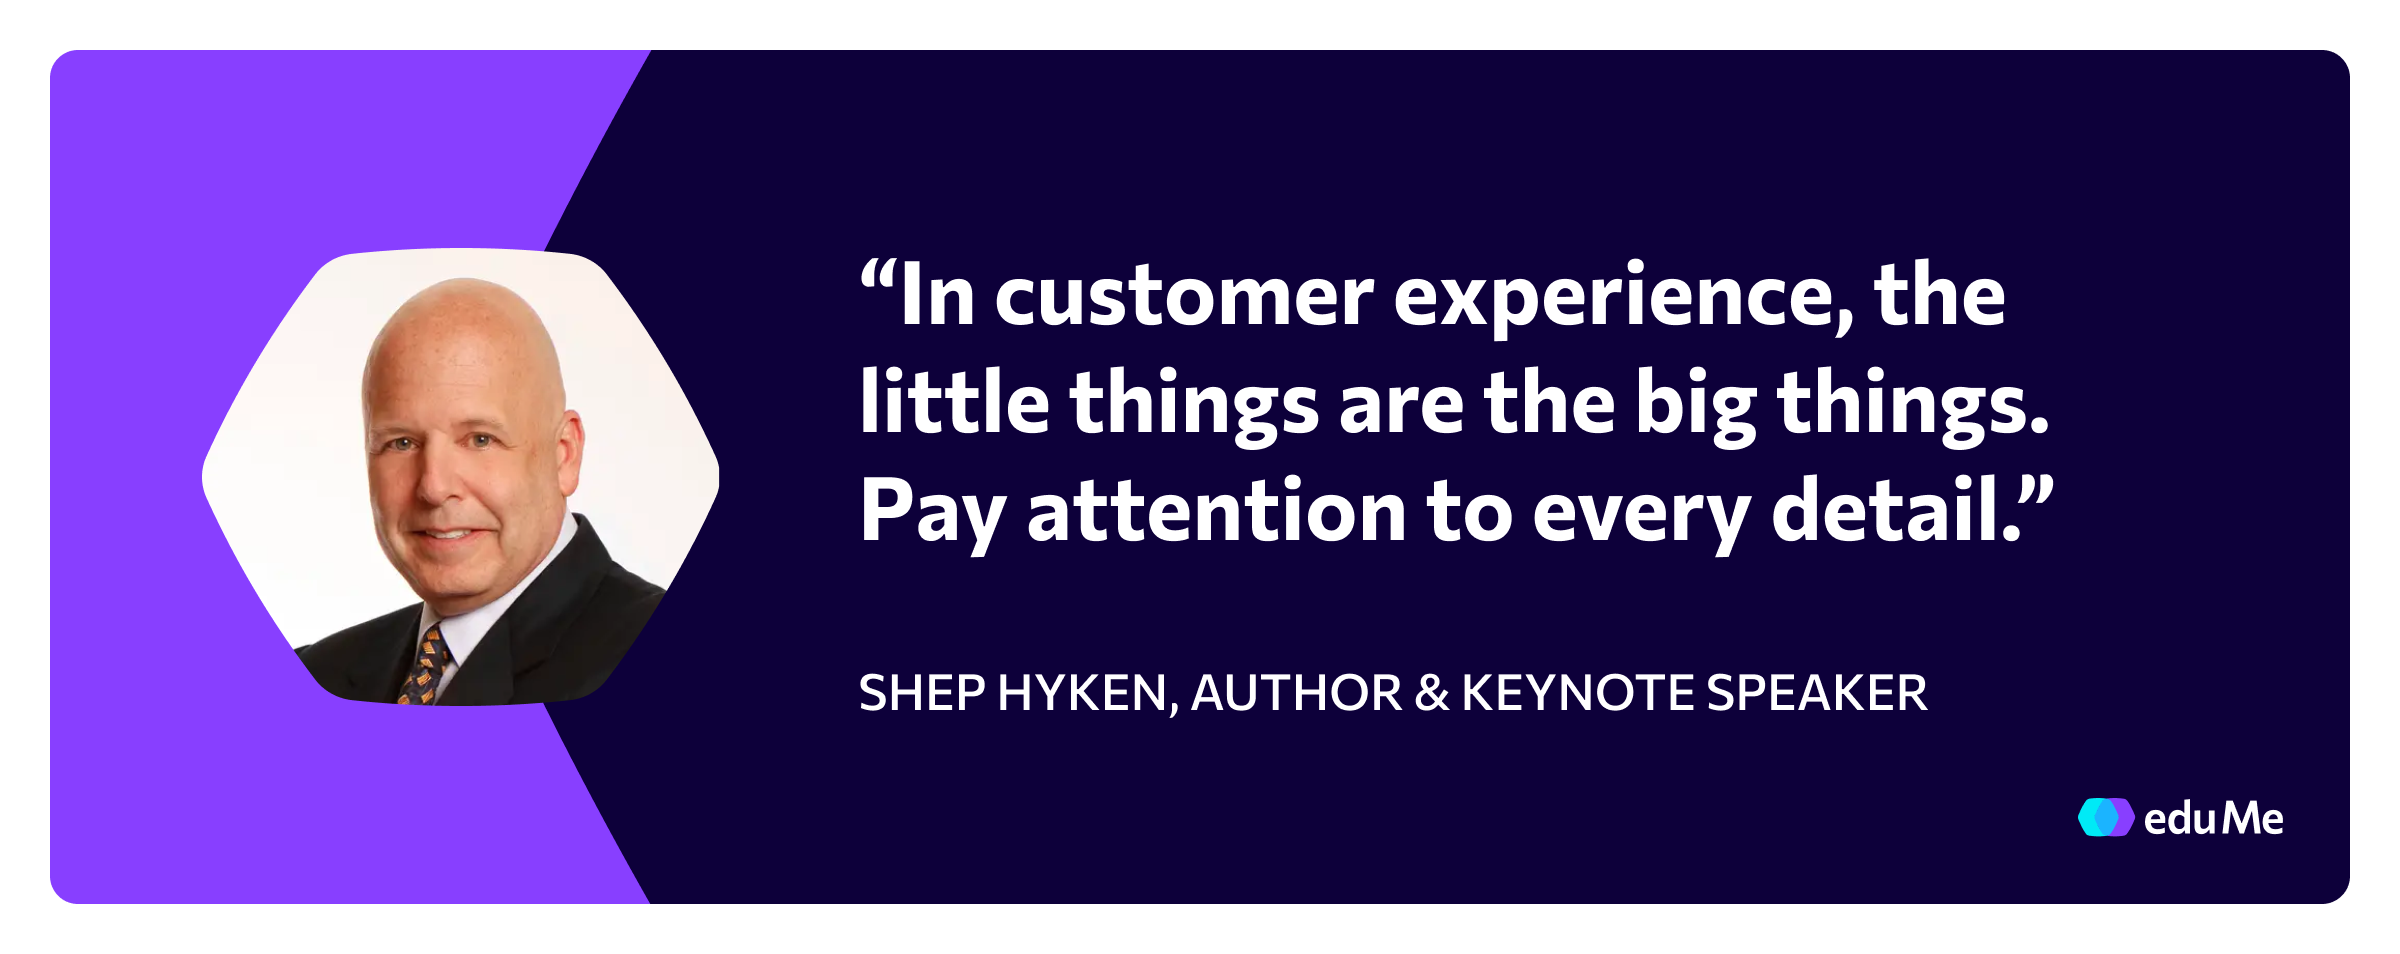 Customer experience quote, Shep Hyken